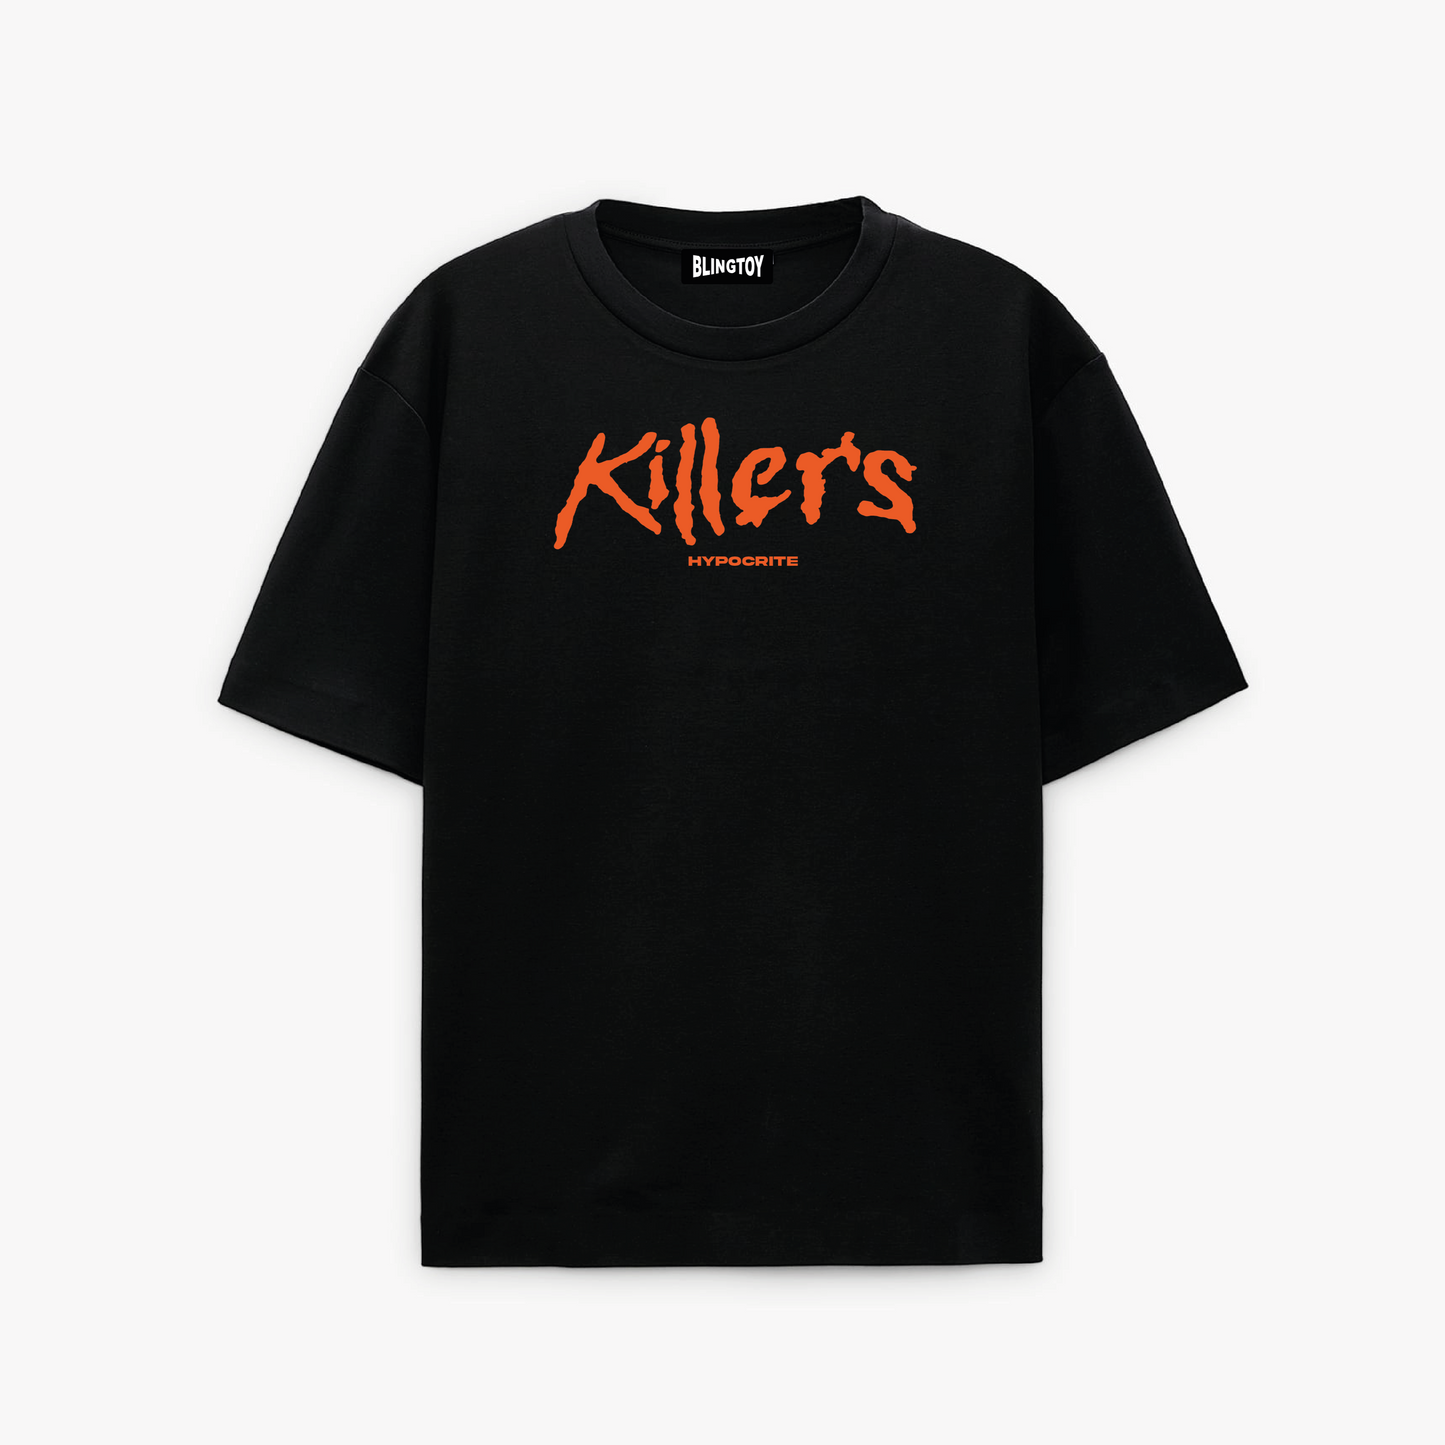 KILLERS HYPOCRITE Shirt